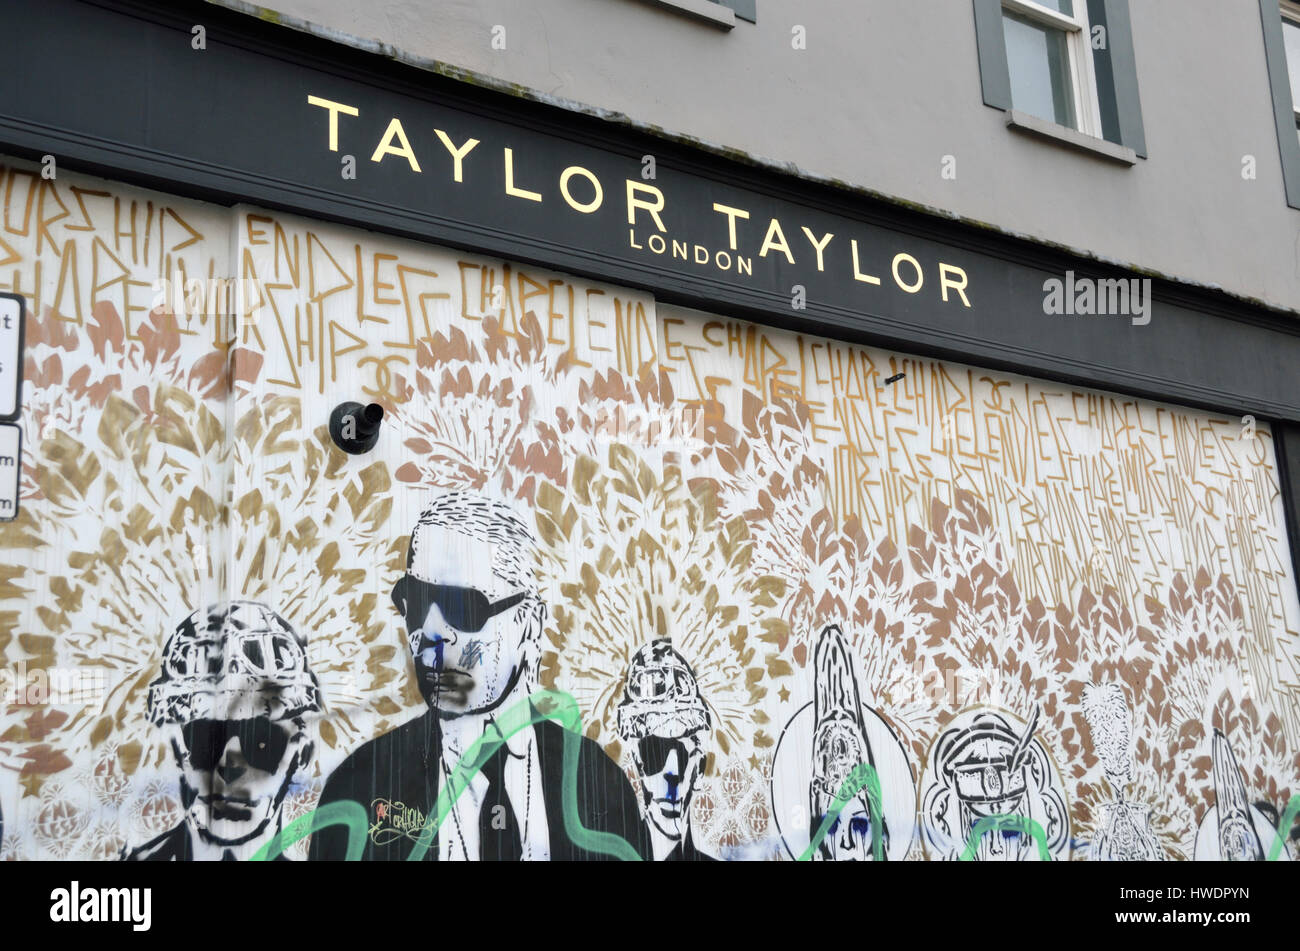 Taylor Taylor London Friseur in Portobello Road, Notting Hill, London, UK. Stockfoto